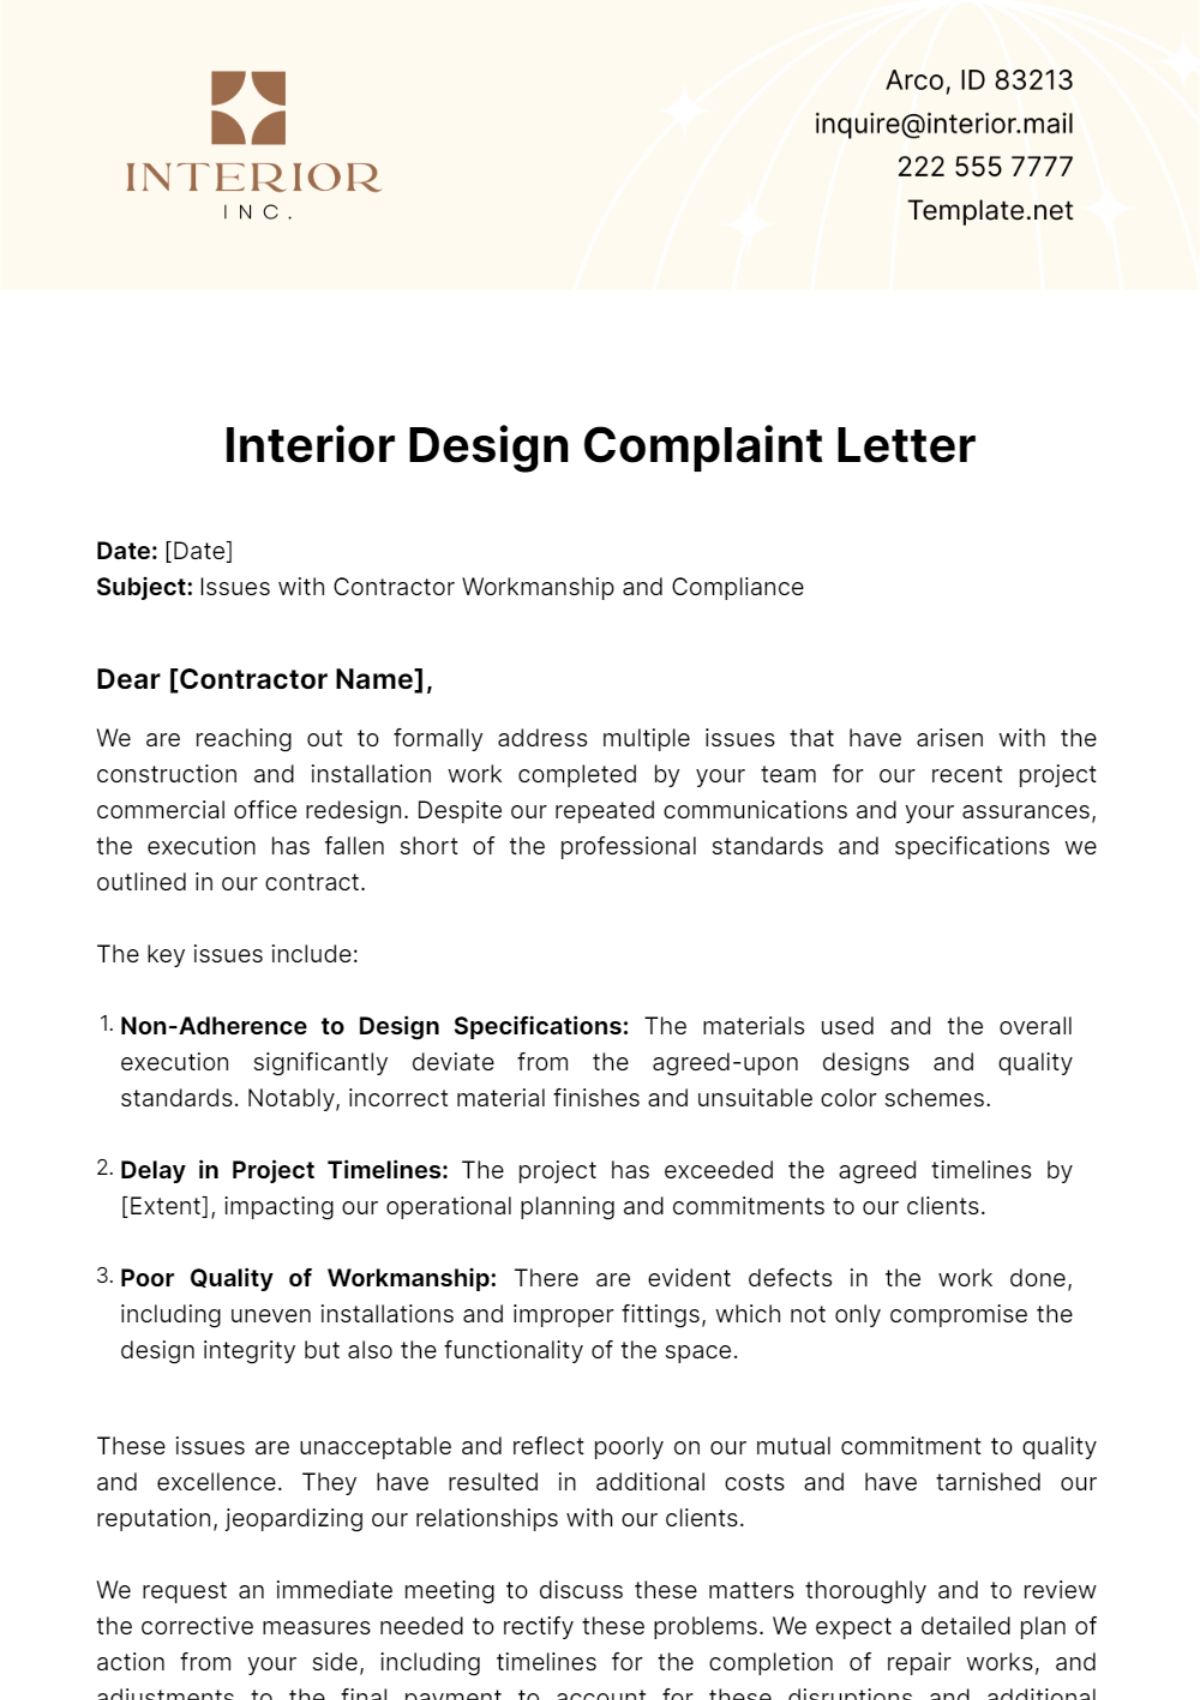 Interior Design Complaint Letter Template